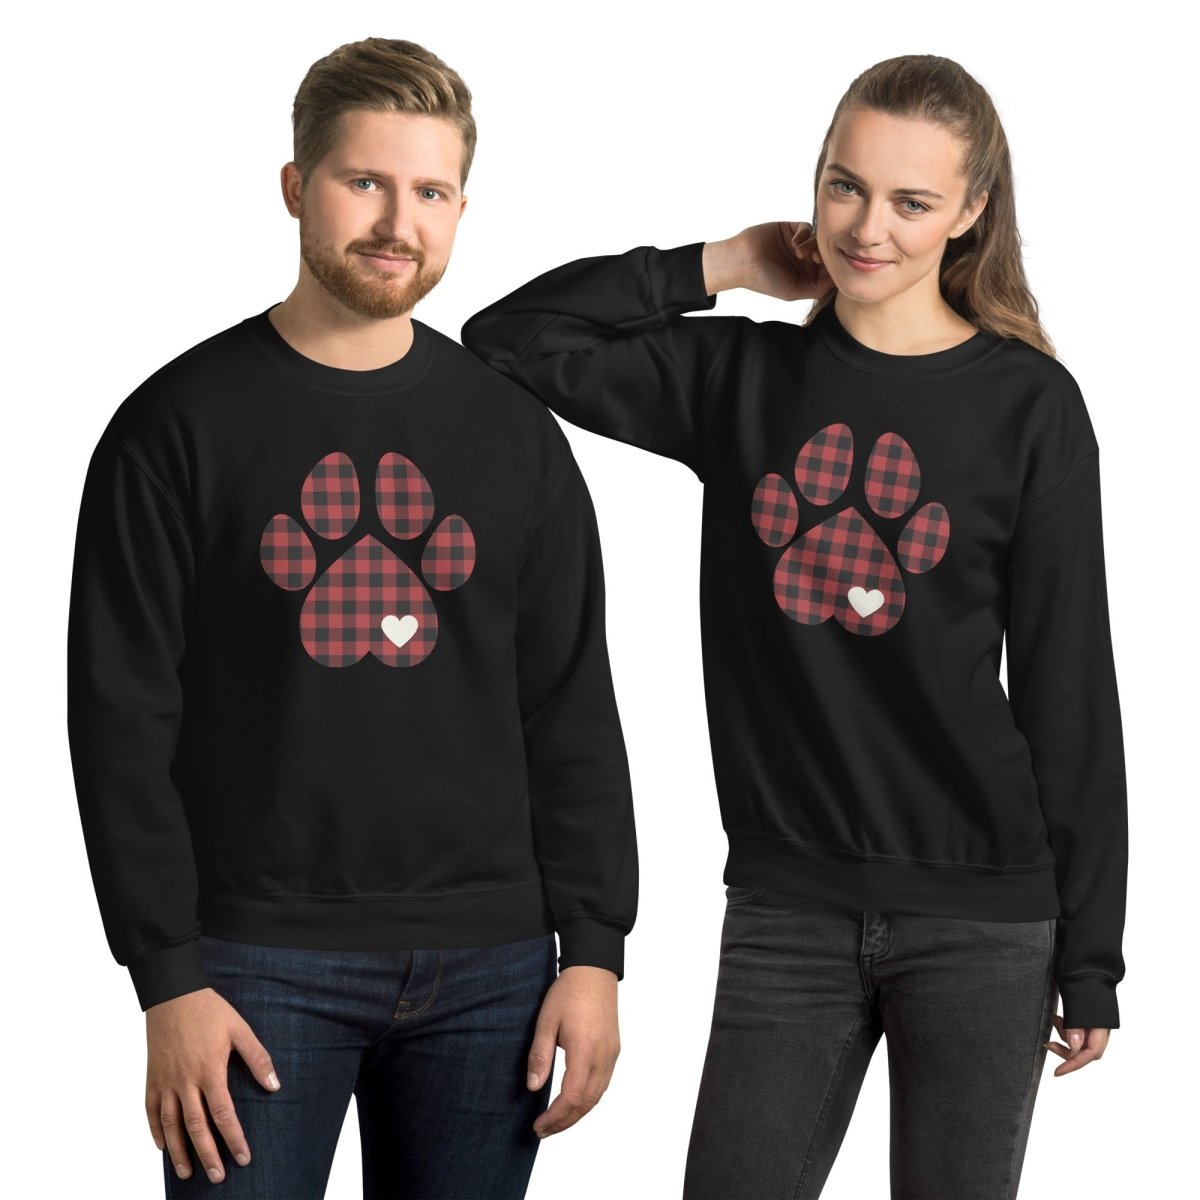 Red Plaid Dog Paw Sweatshirt - DoggyLoveandMore